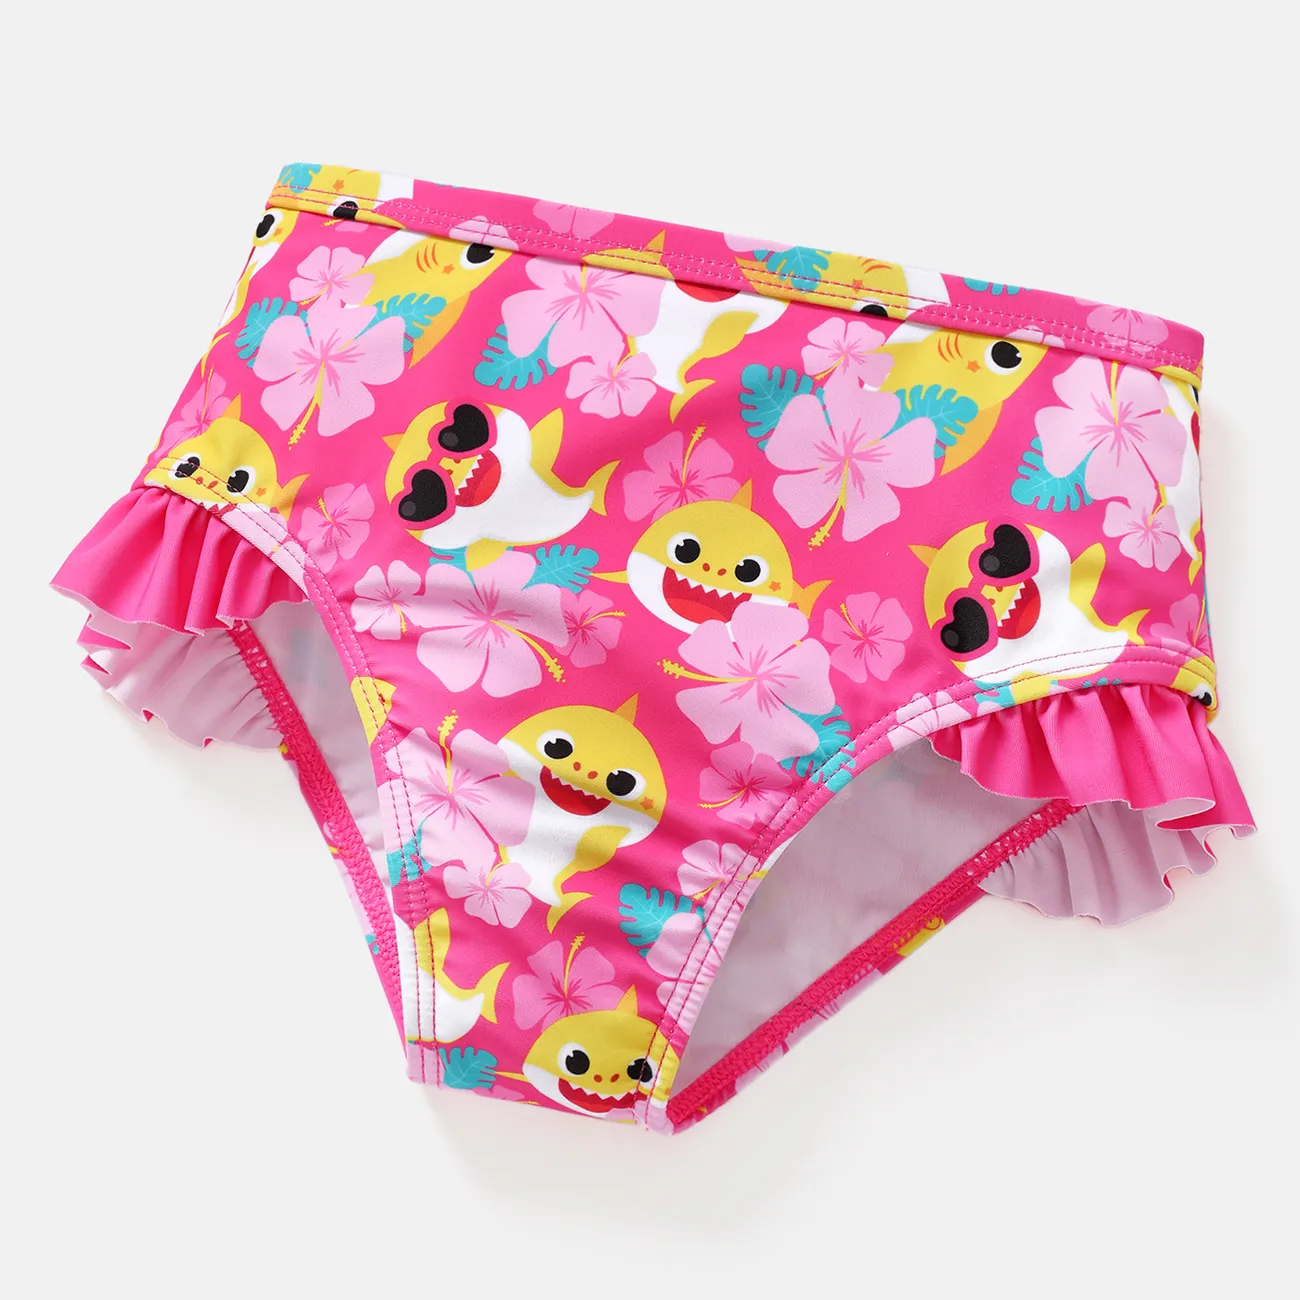 Baby Shark Toddler Girl/Boy 2pcs Long-sleeve Top and Shorts Swimsuit Dark Pink big image 1